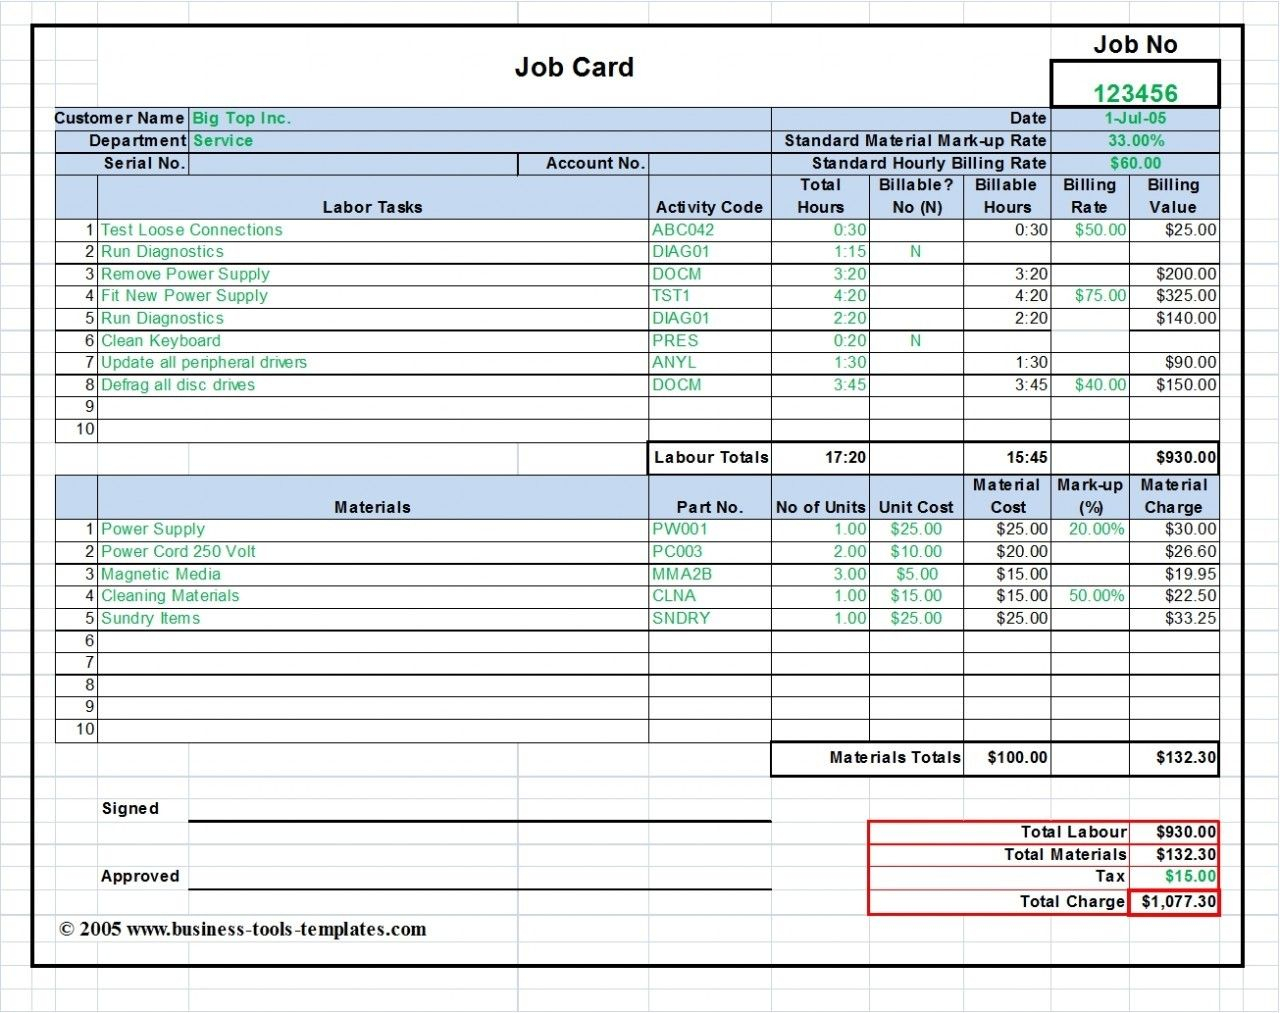 Workshop Job Card Template Excel, Labor & Material Cost Inside Maintenance Job Card Template